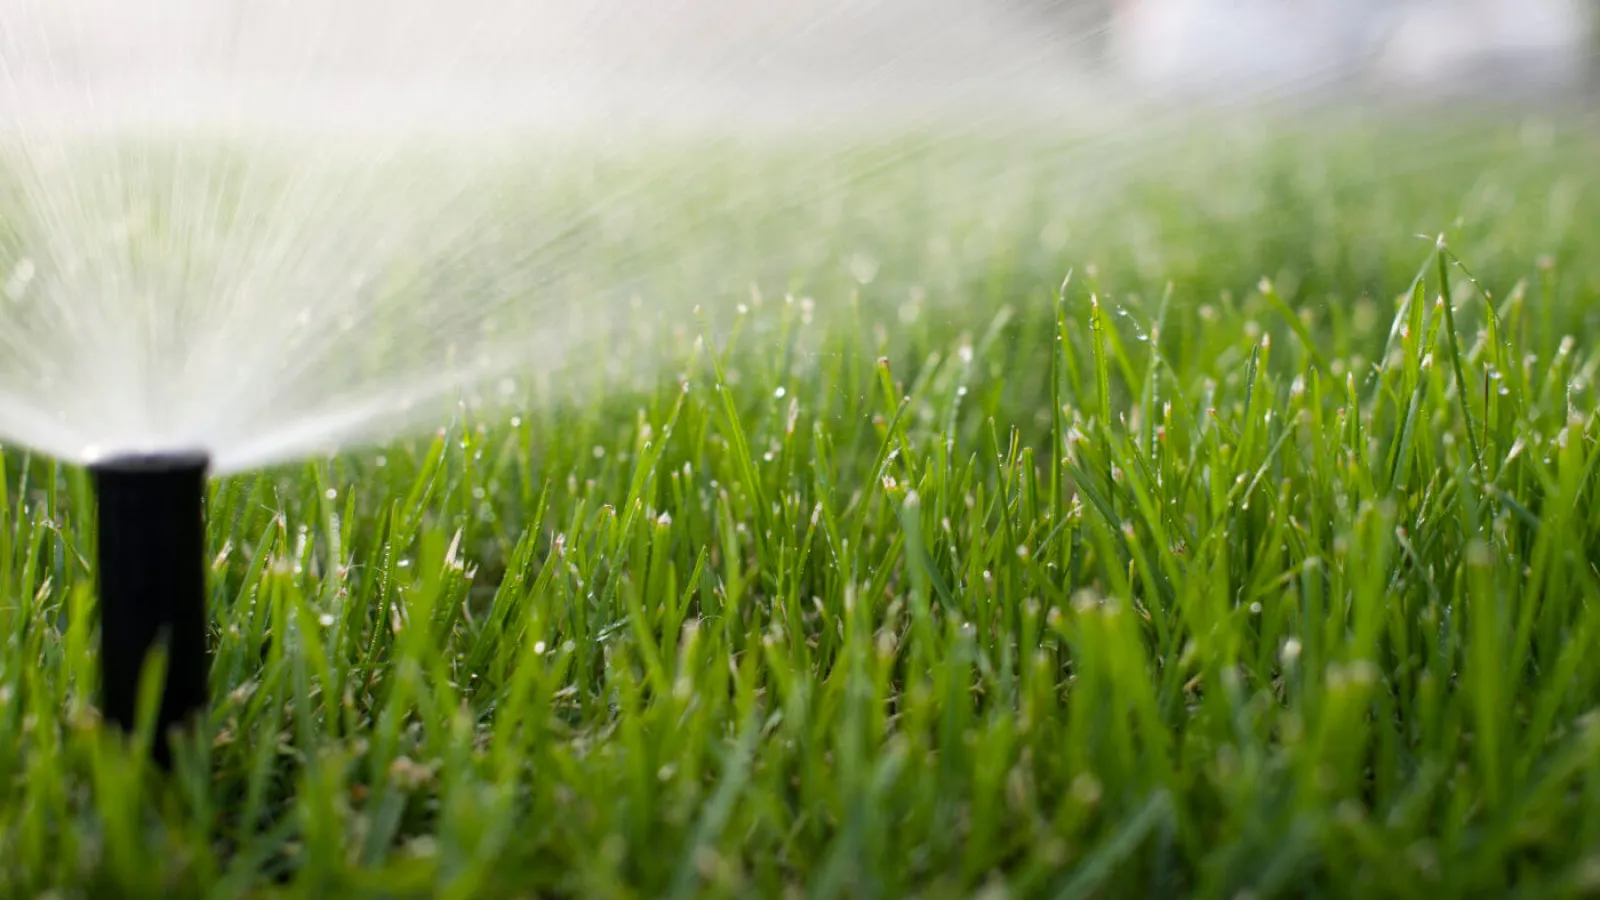 a sprinkler spraying water on bermuda grass